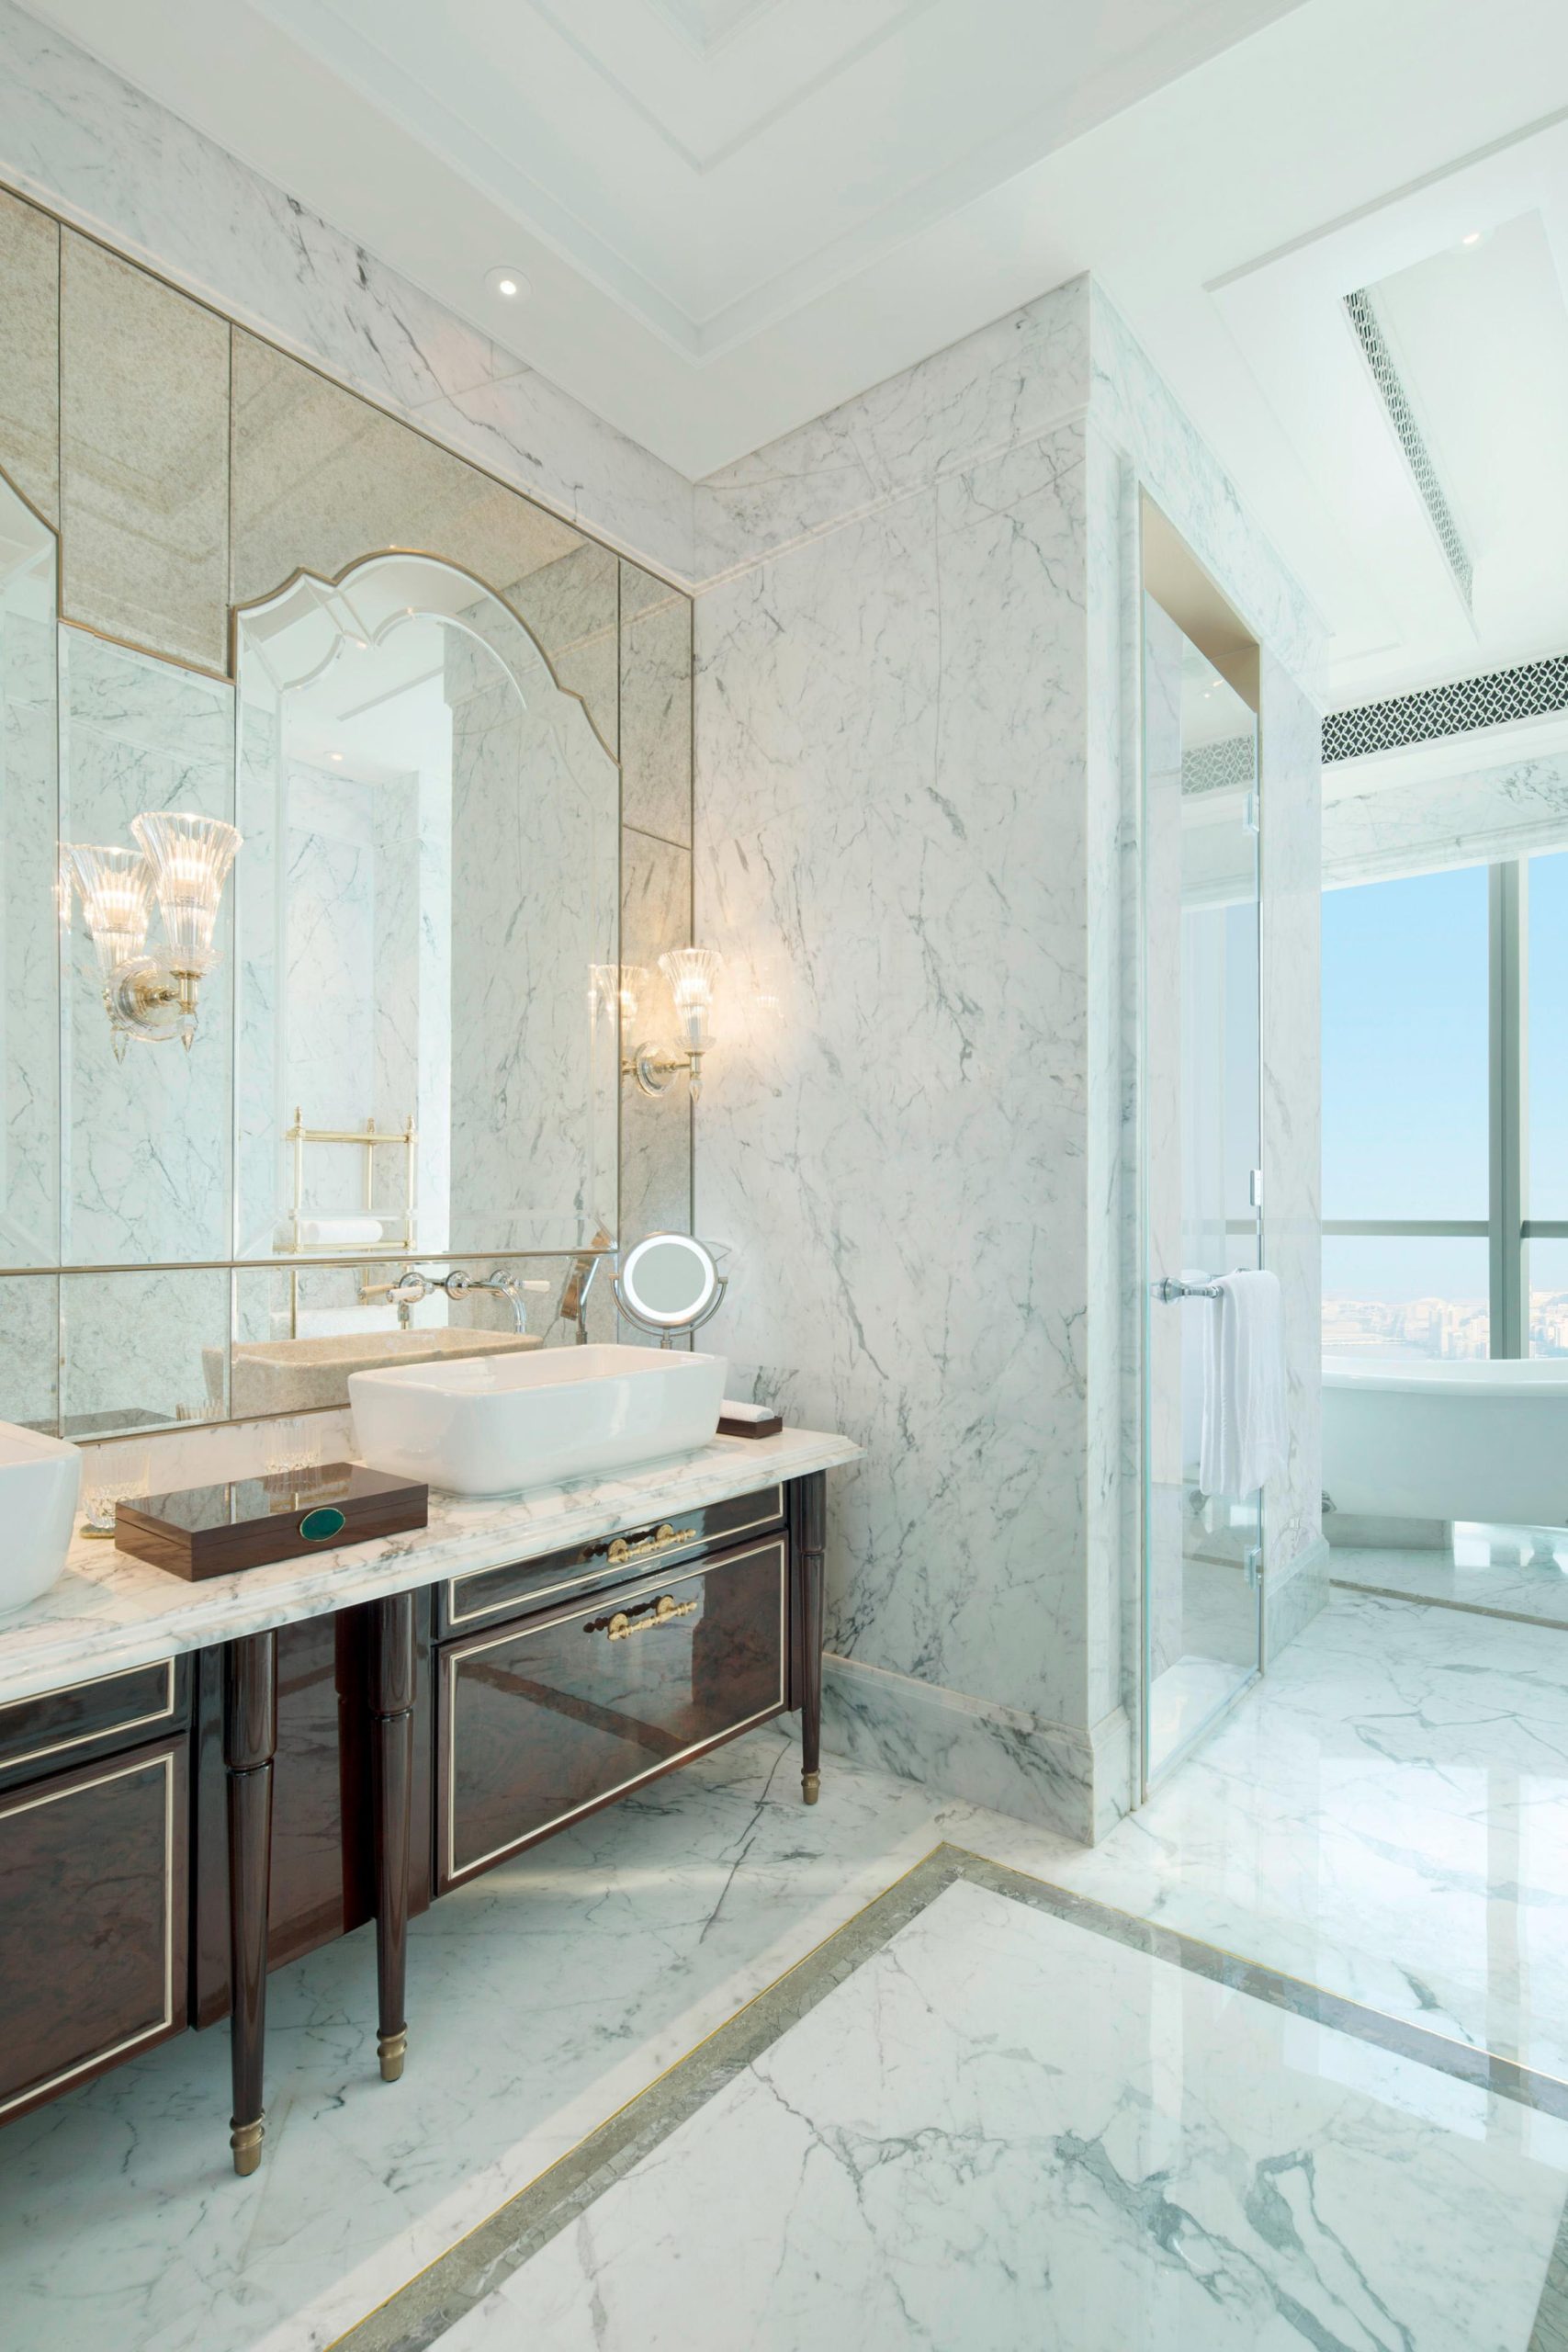 The St. Regis Zhuhai Hotel - Zhuhai, Guangdong, China - Shizimen River View Twin Bathroom Separate Tub and Shower